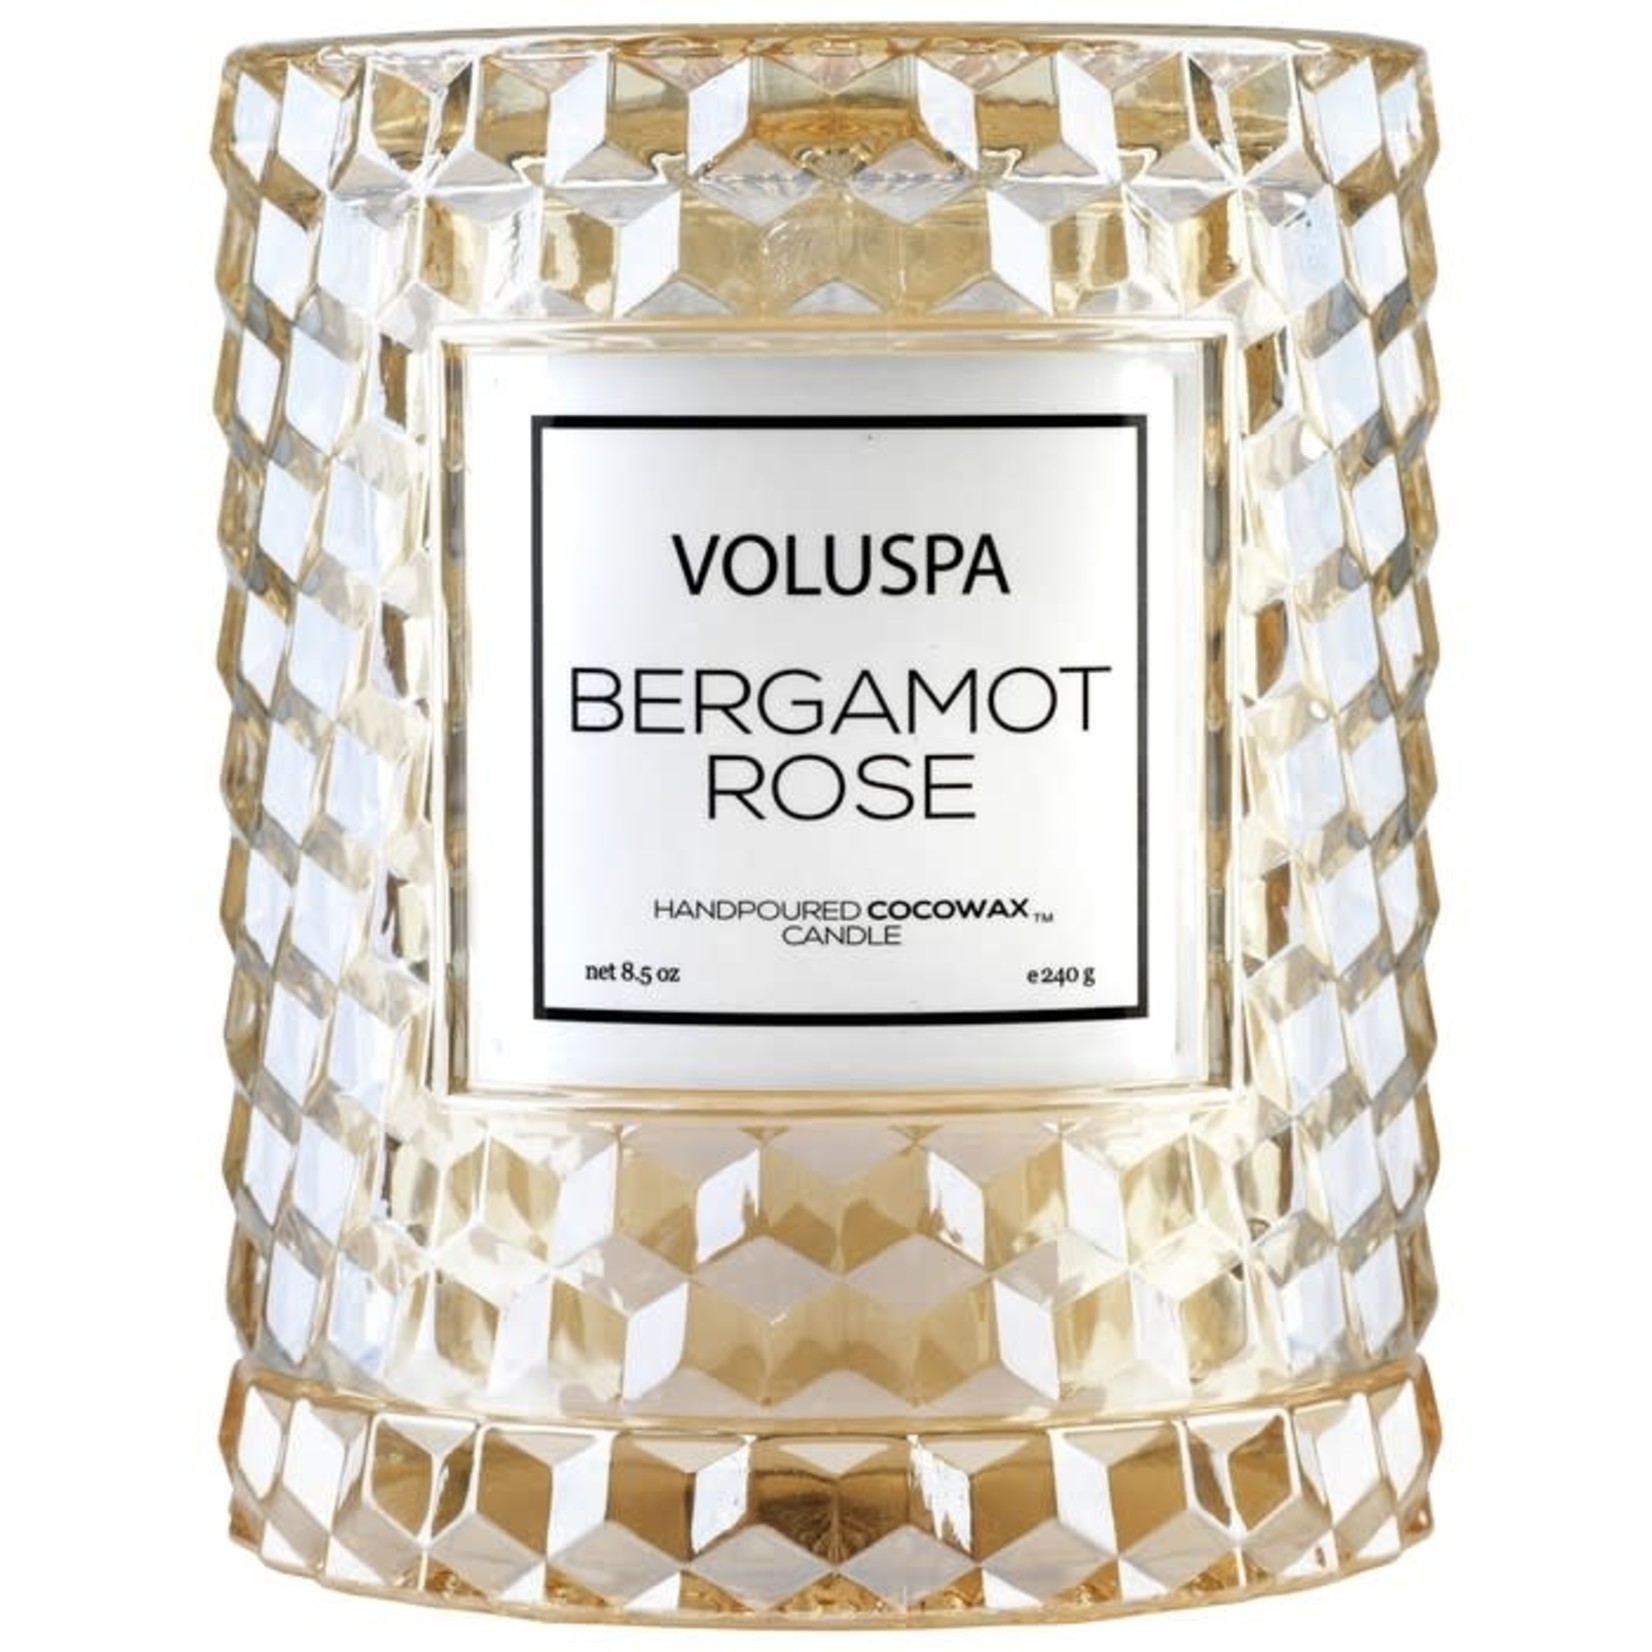 Voluspa Bergamont Rose Icon Candle with Cloche Cover